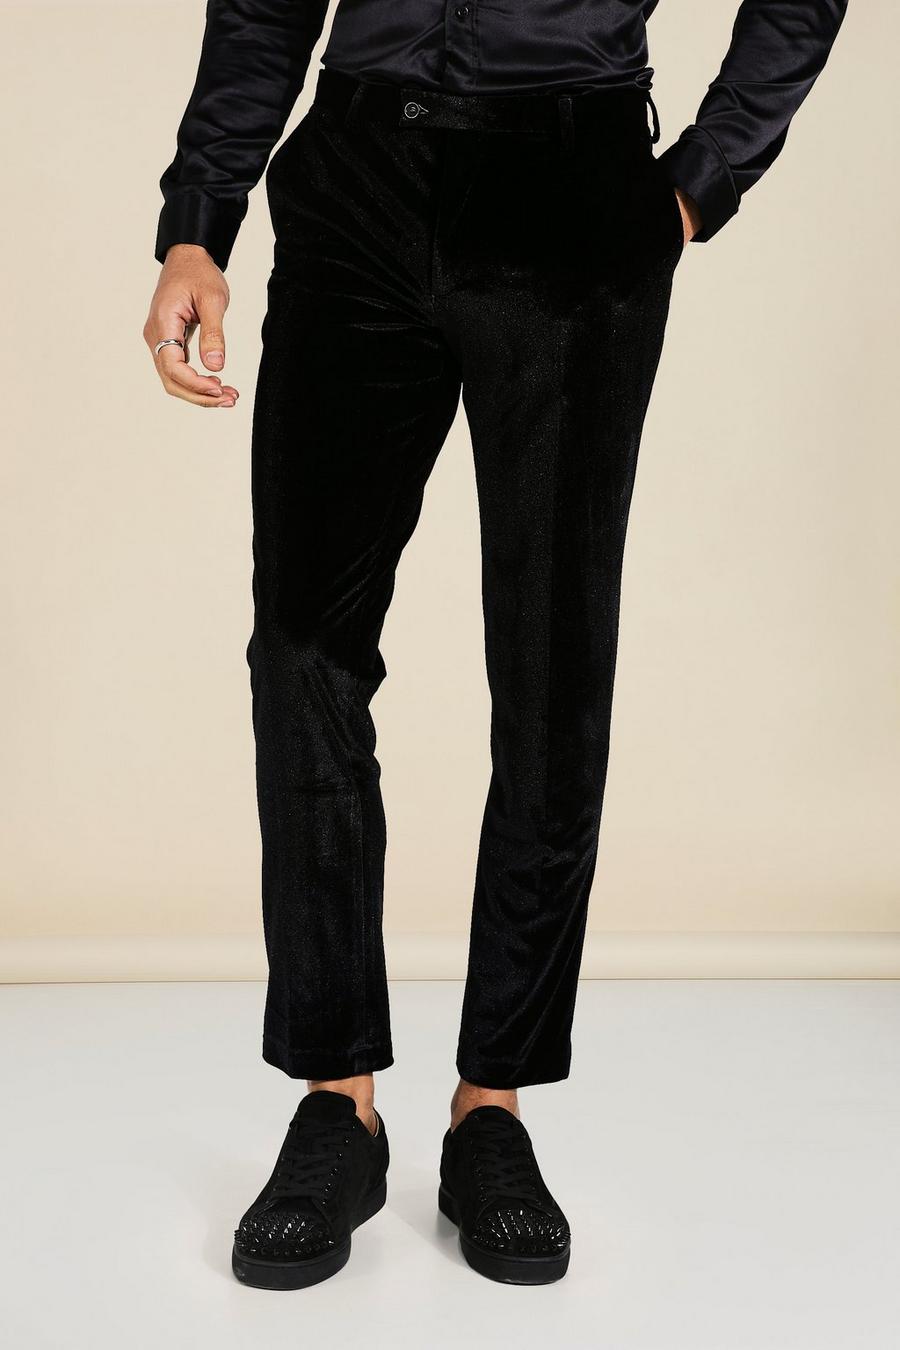 Pantaloni Slim Fit in velours, Black negro